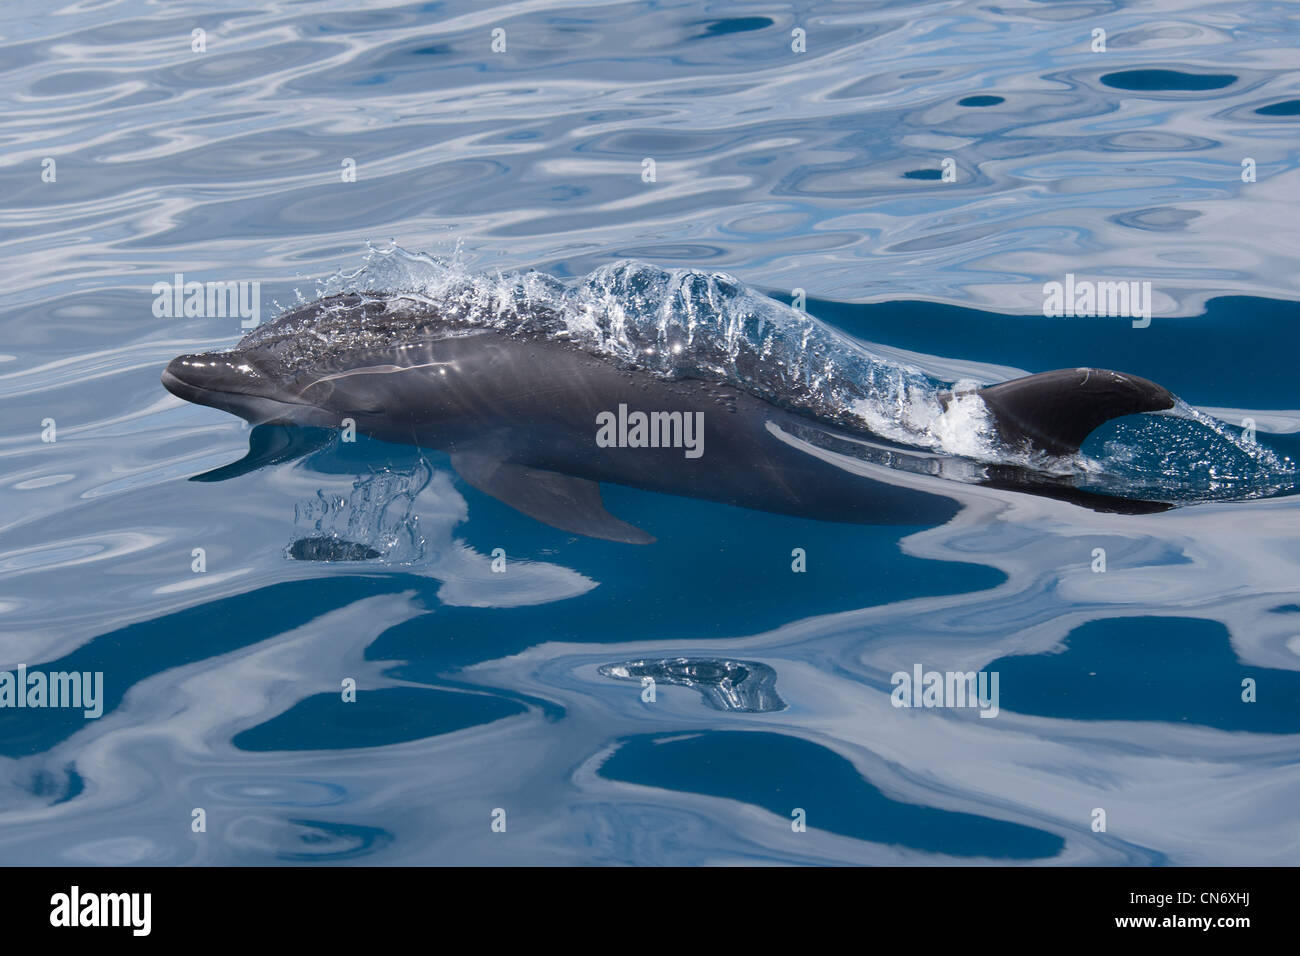 Common Bottlenose Dolphin, Tursiops truncatus, surfacing. Costa Rica, Pacific Ocean. Stock Photo